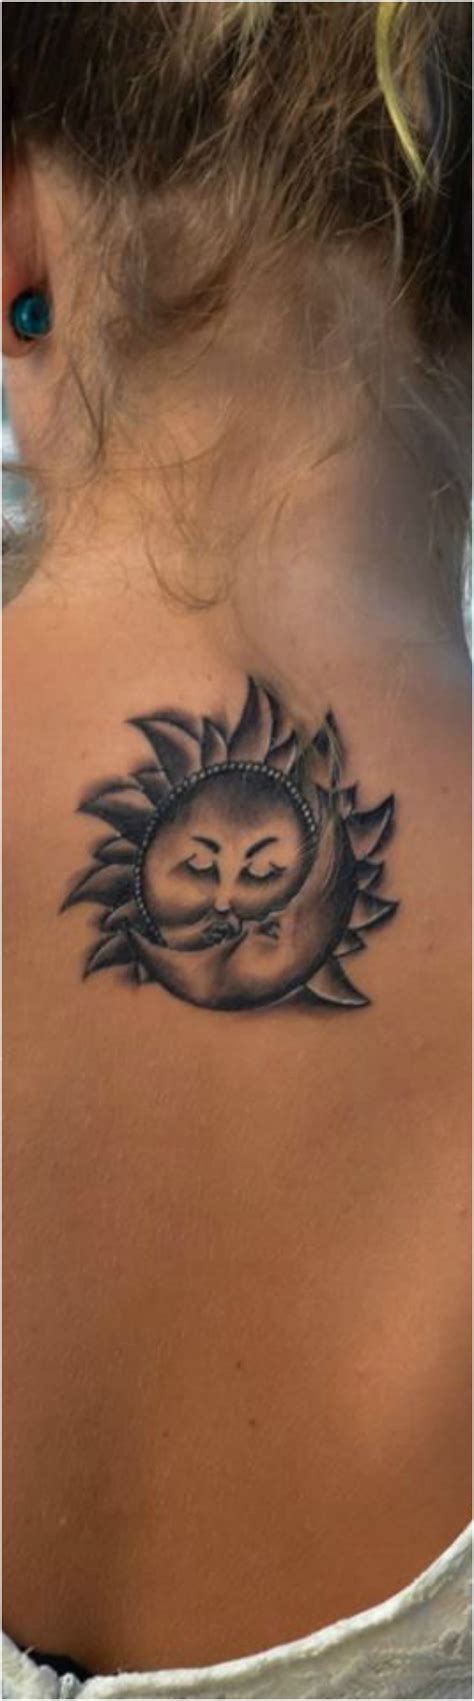 35 Sun Tattoos Ideas For Men And Women Sun Tattoos Tattoos Unique